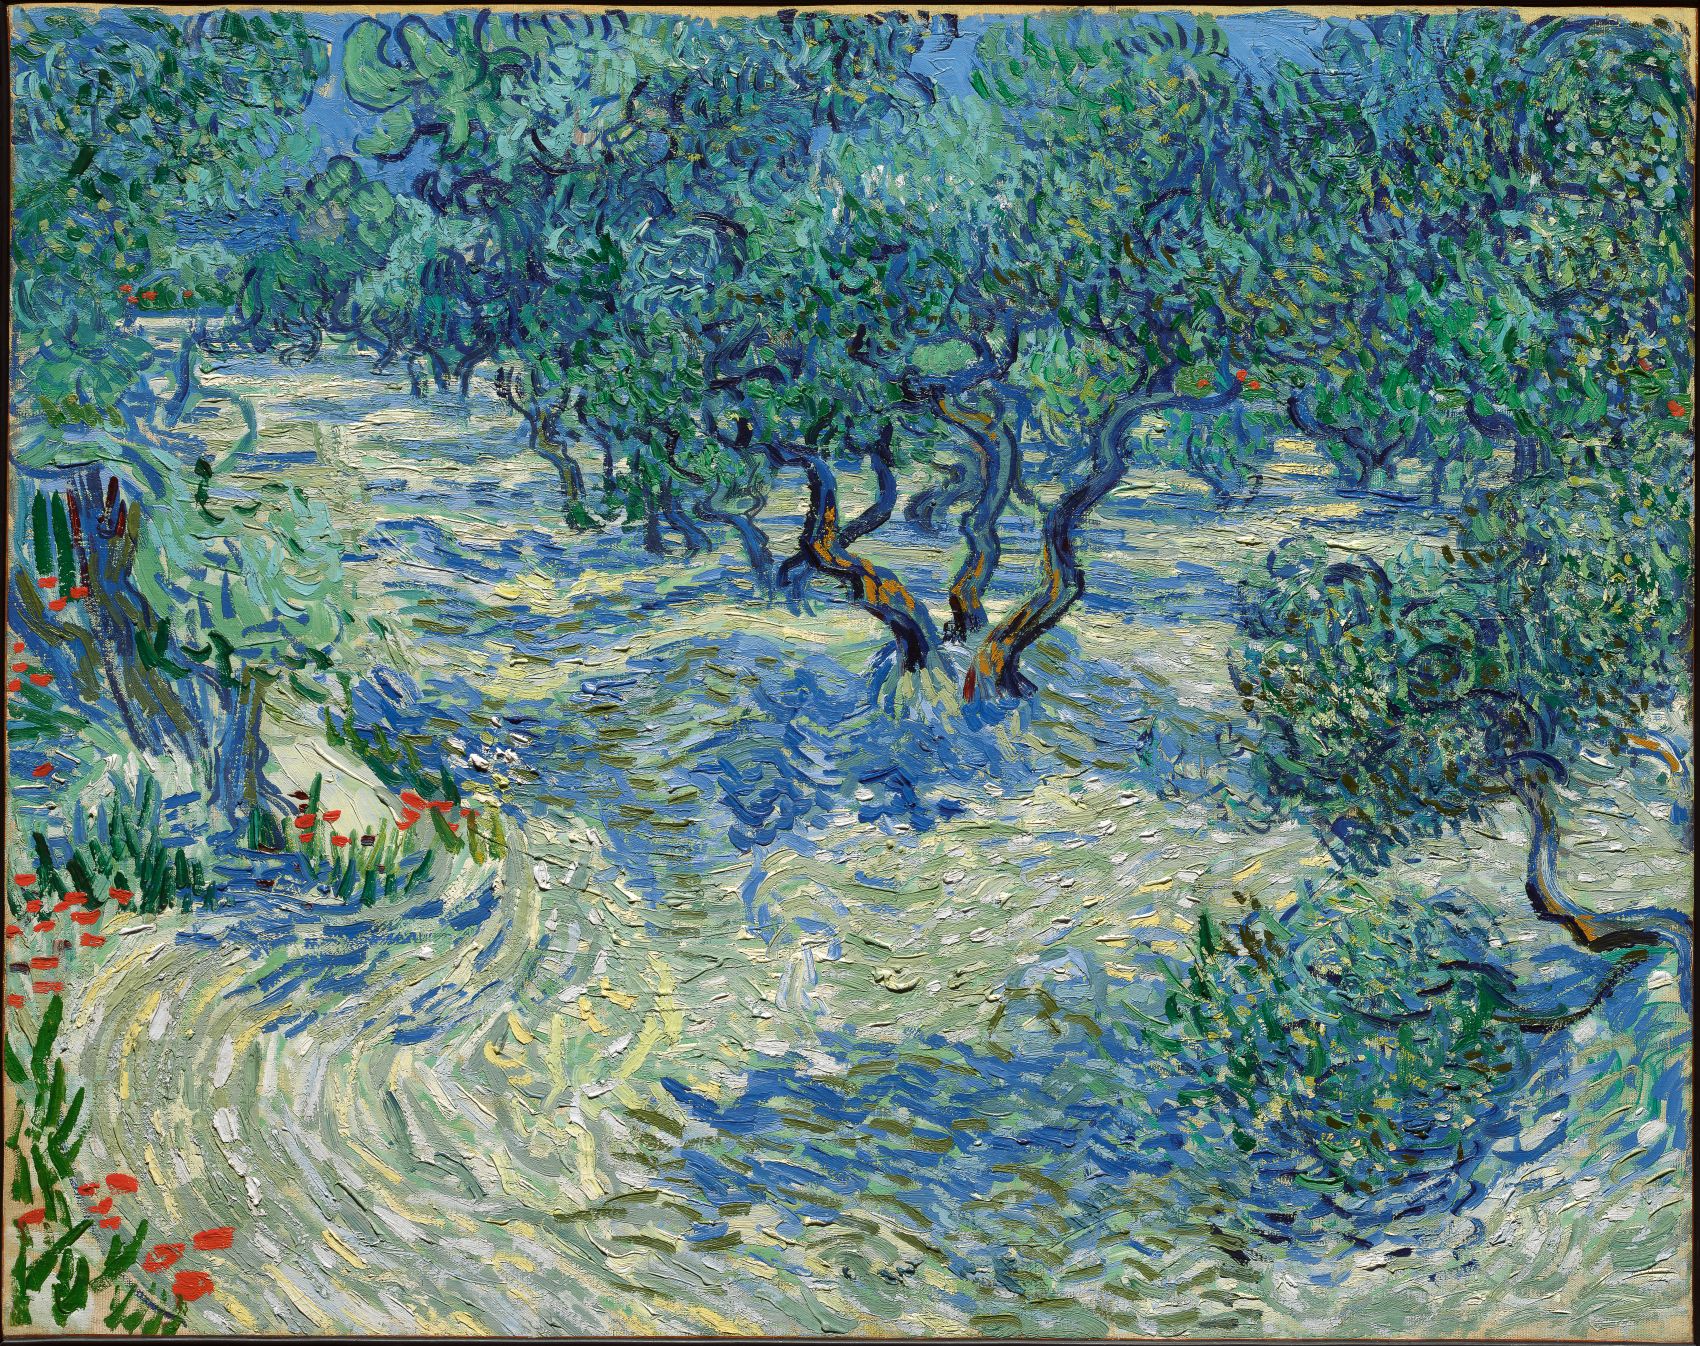 Olijfbomen by Vincent Van Gogh - 1889 - 73,2 x 92,2 cm 